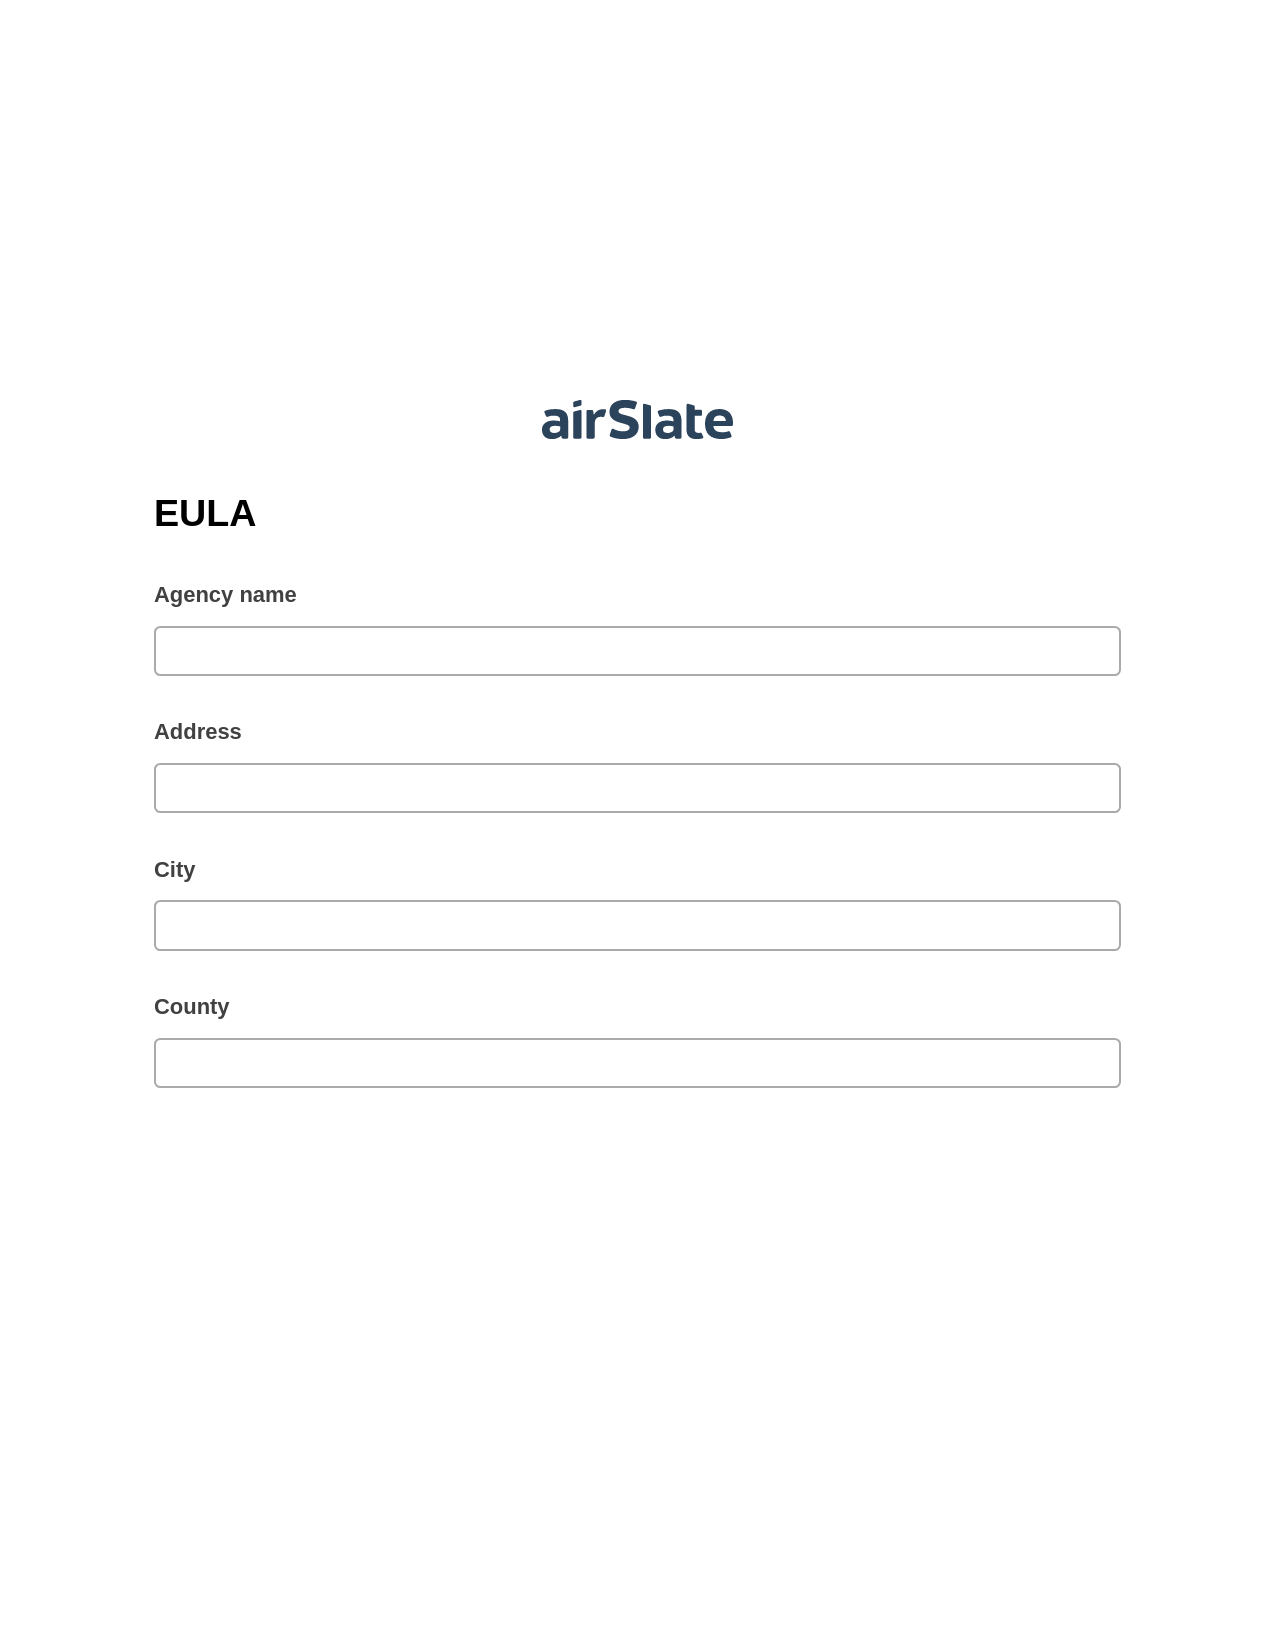 EULA Pre-fill from CSV File Bot, Reminder Bot, Box Bot